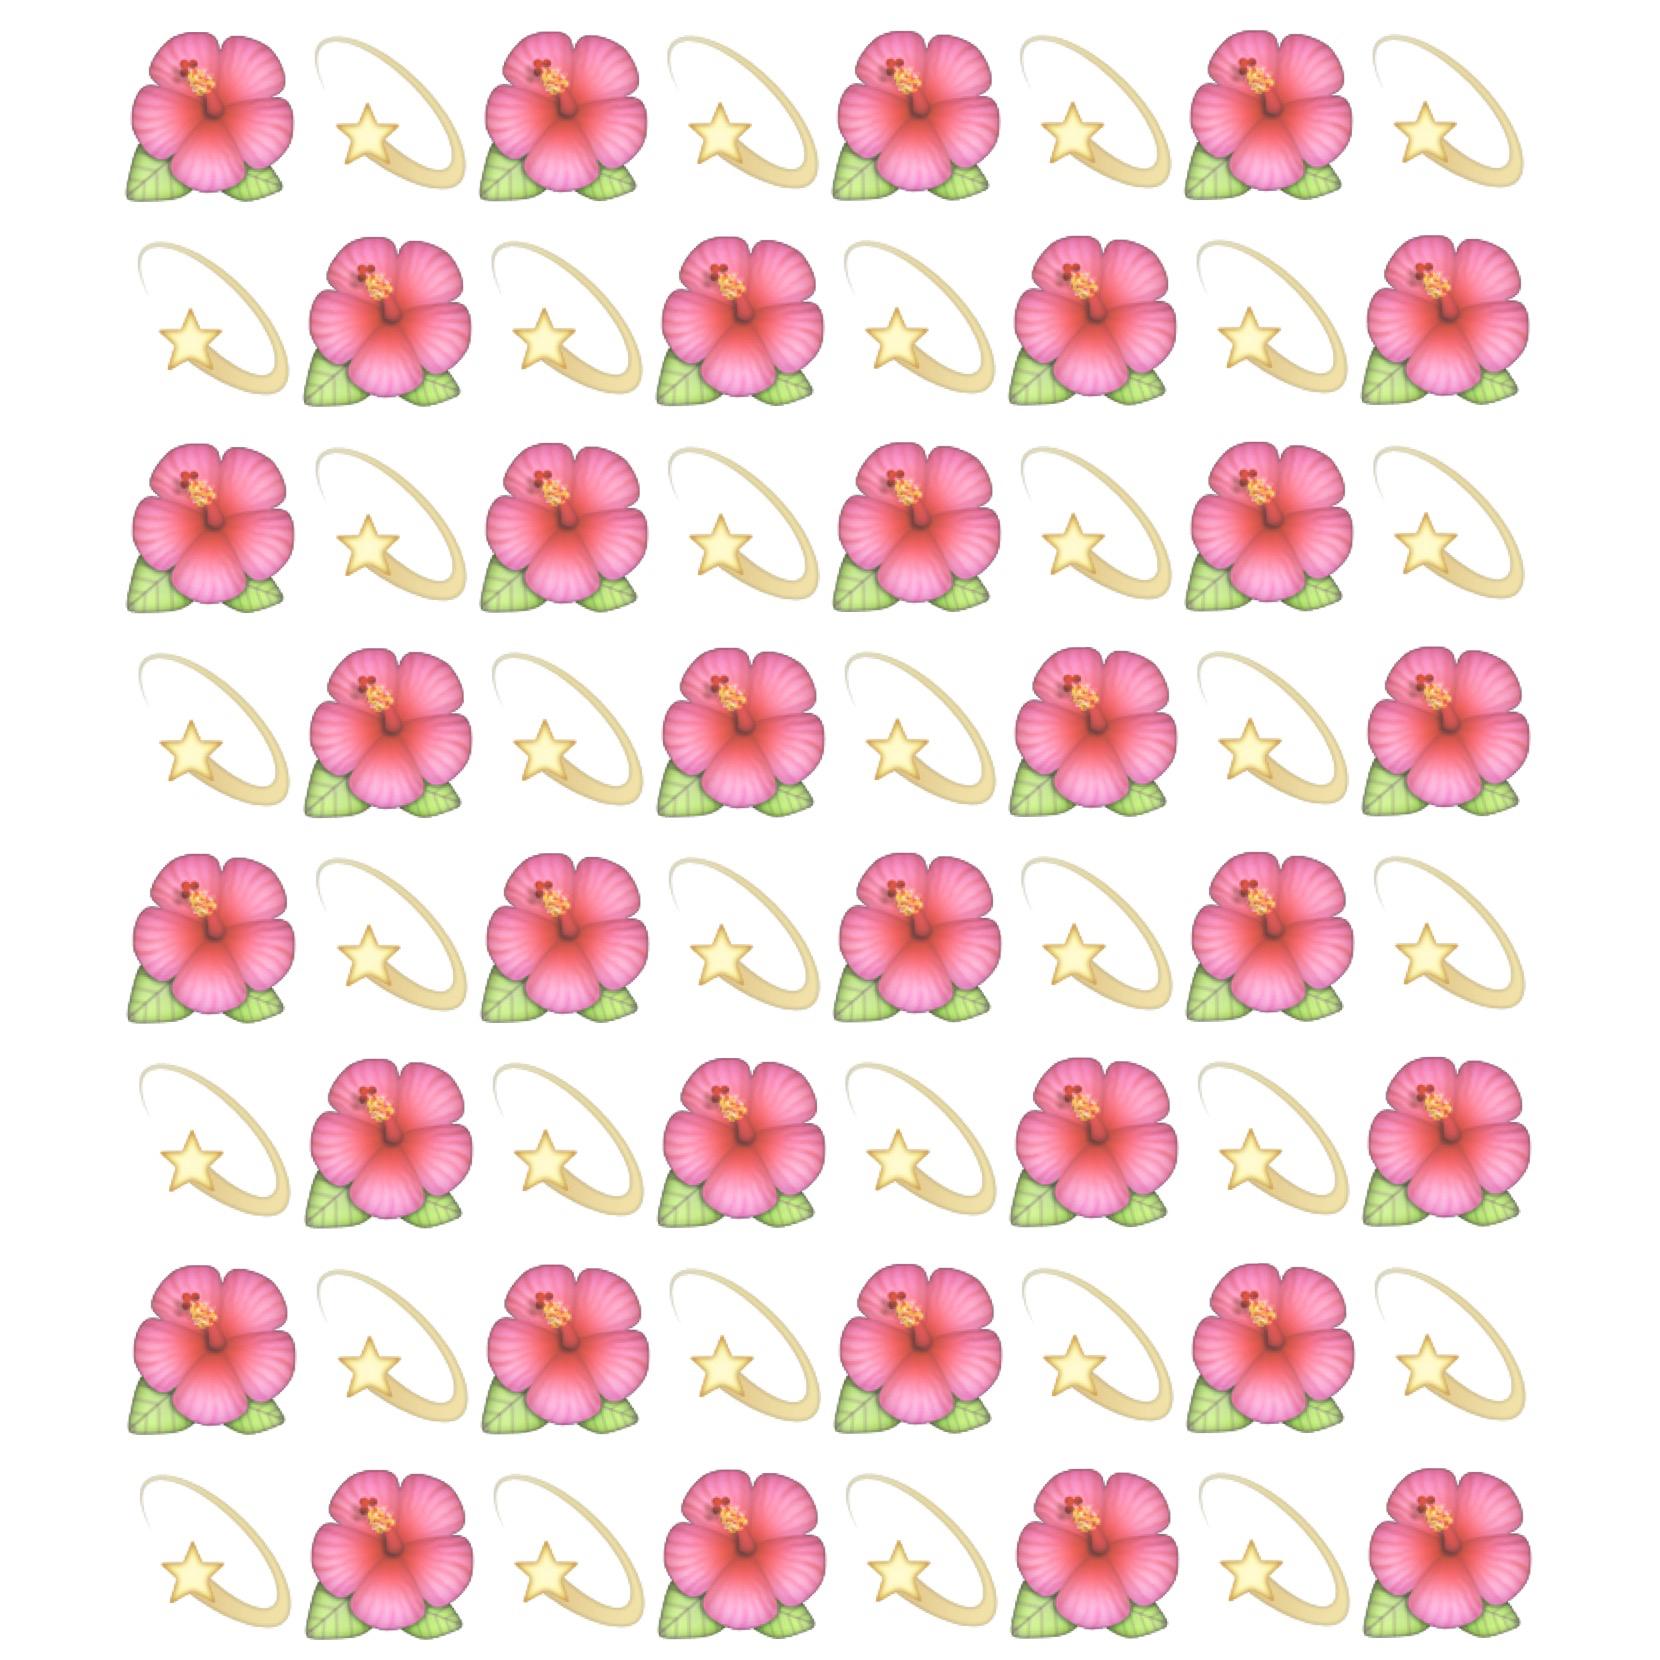 My All Time Favorite Emoji 🌺 - Garden Roses - HD Wallpaper 